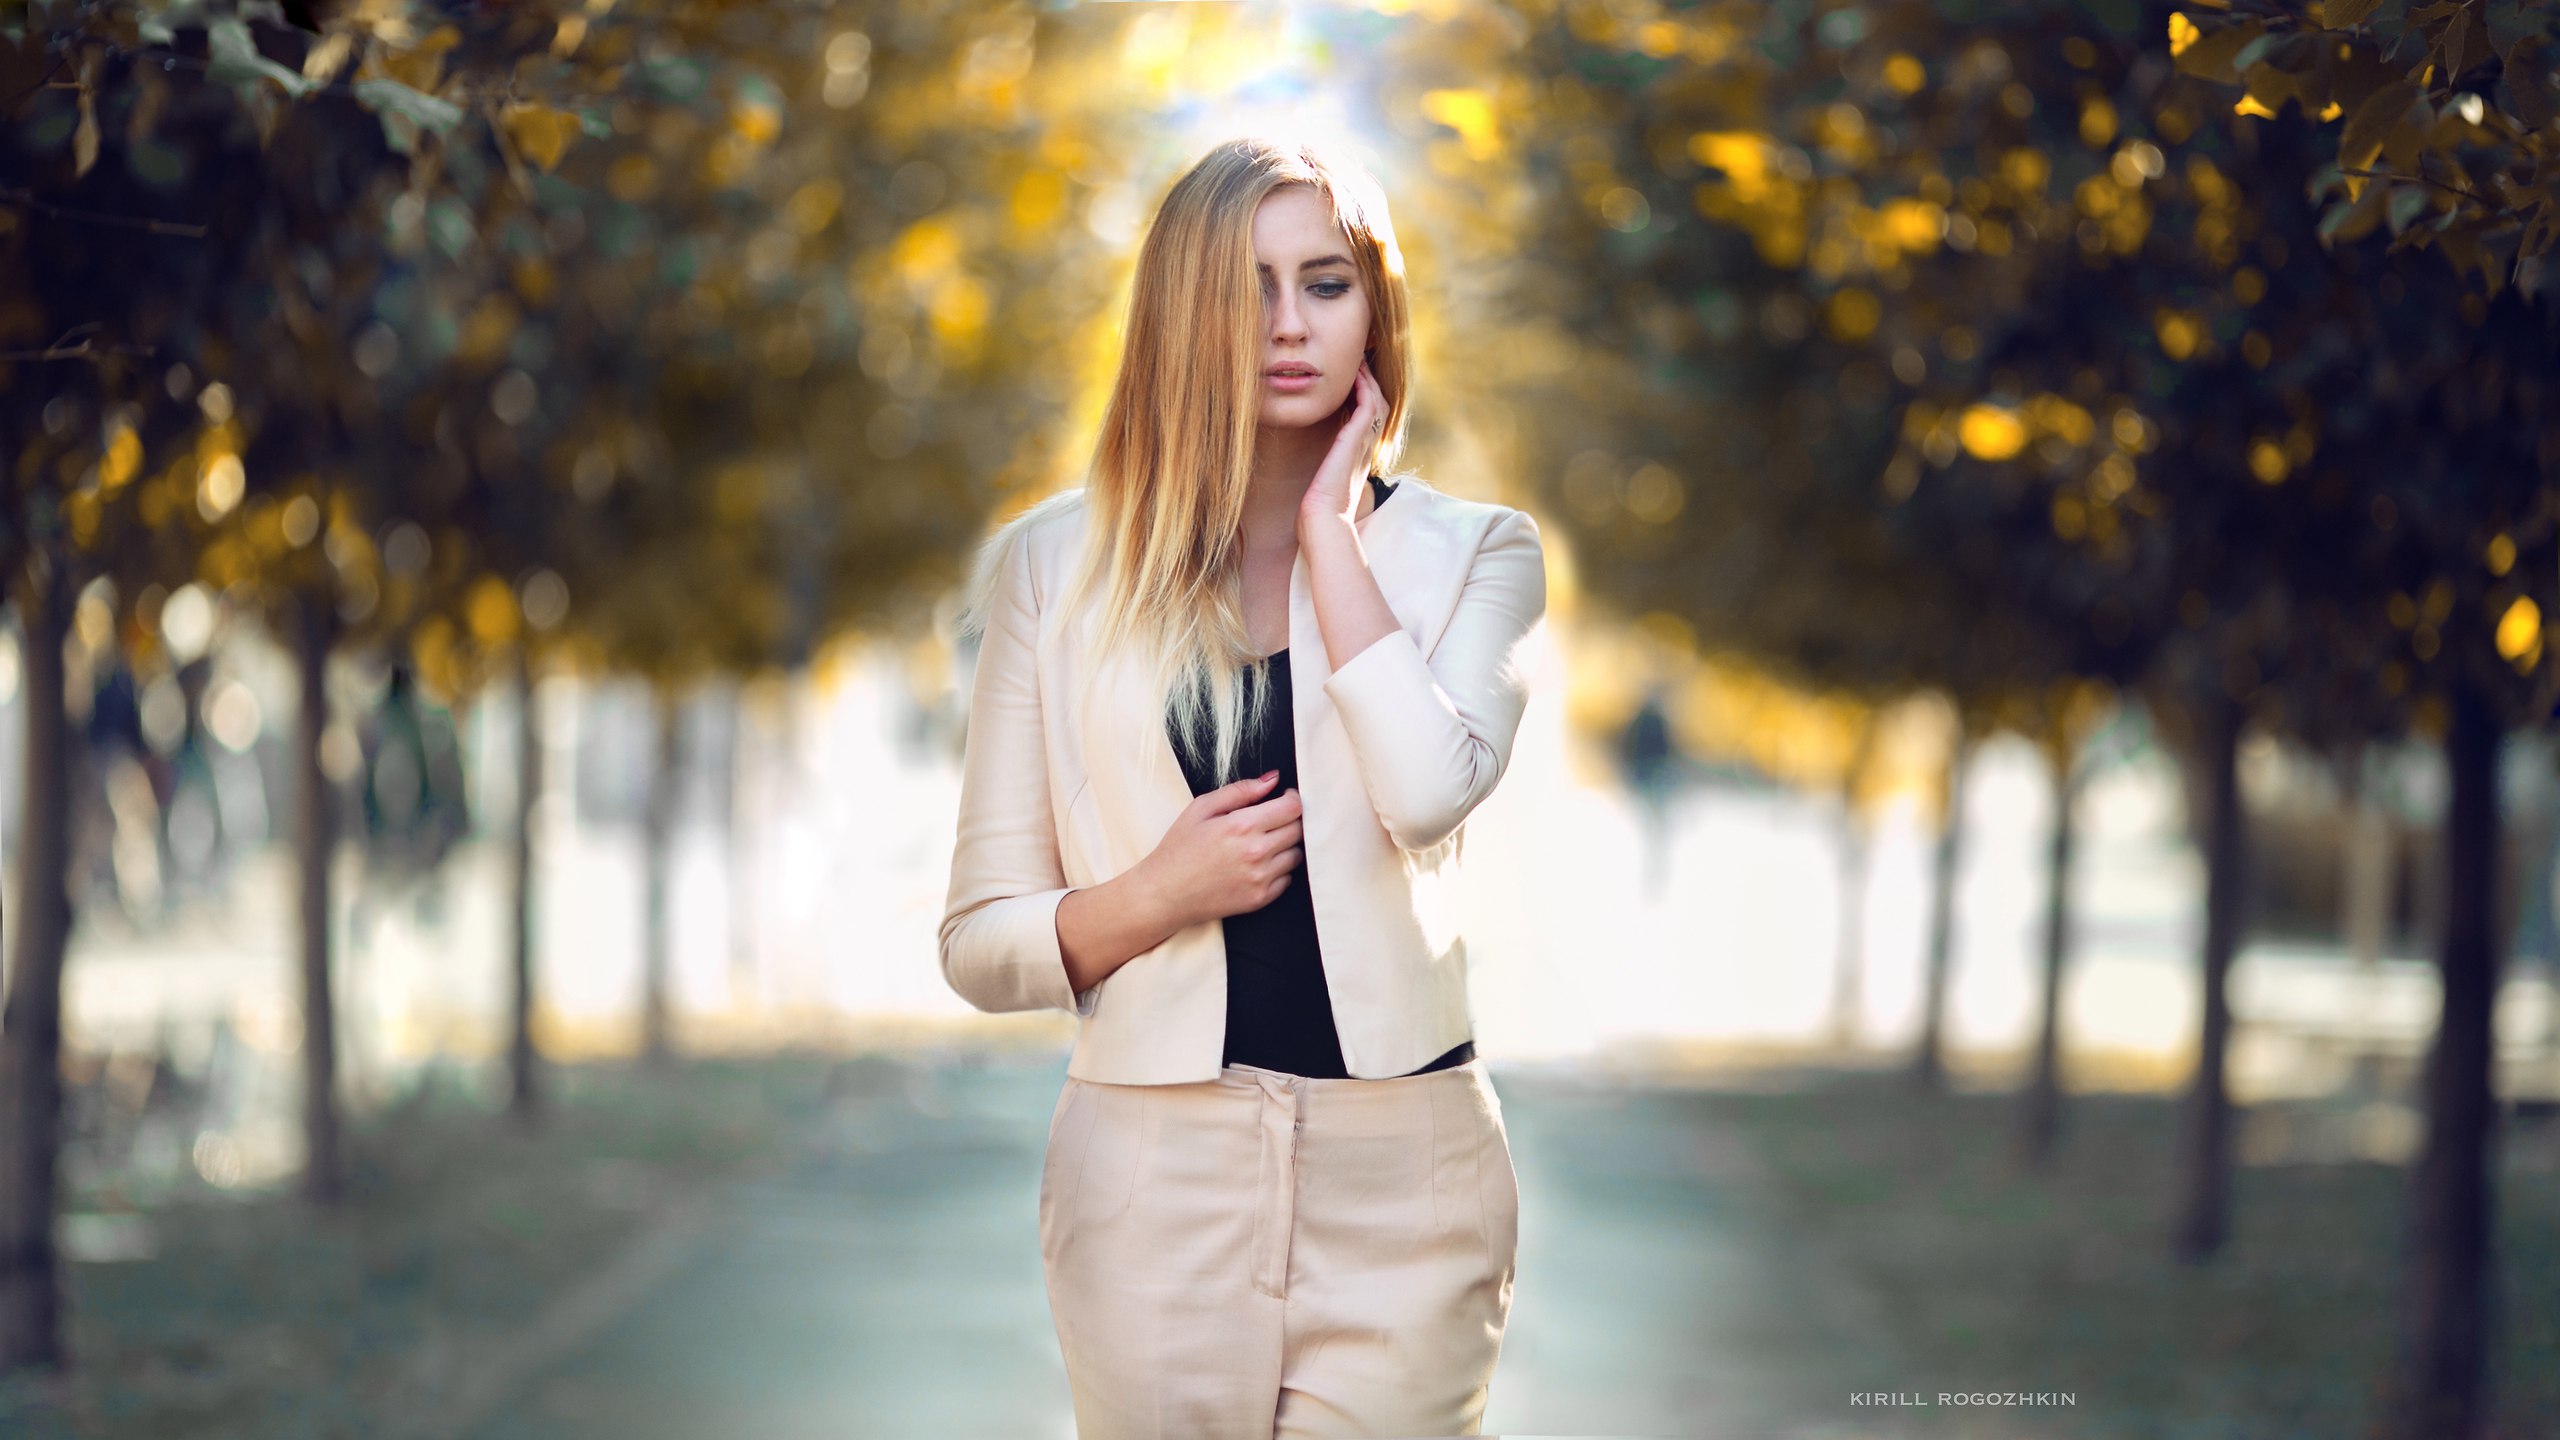 People 2560x1440 trees women outdoors women Kirill Rogozhkin blonde long hair white jacket jacket model